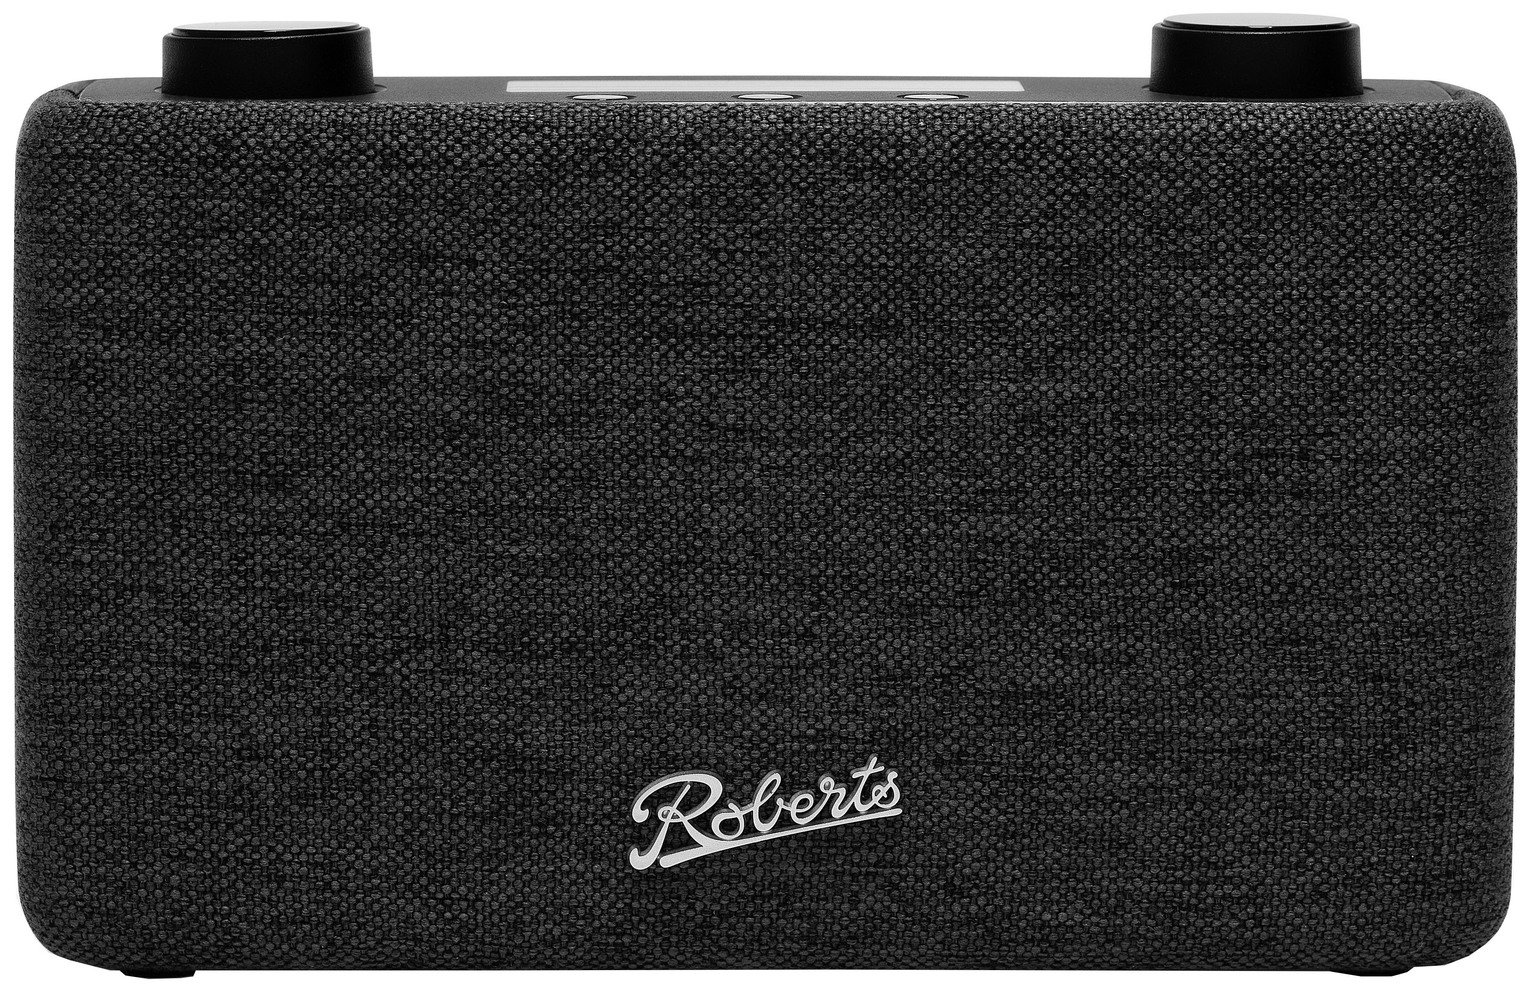 Roberts Play FM Portable Radio - Black